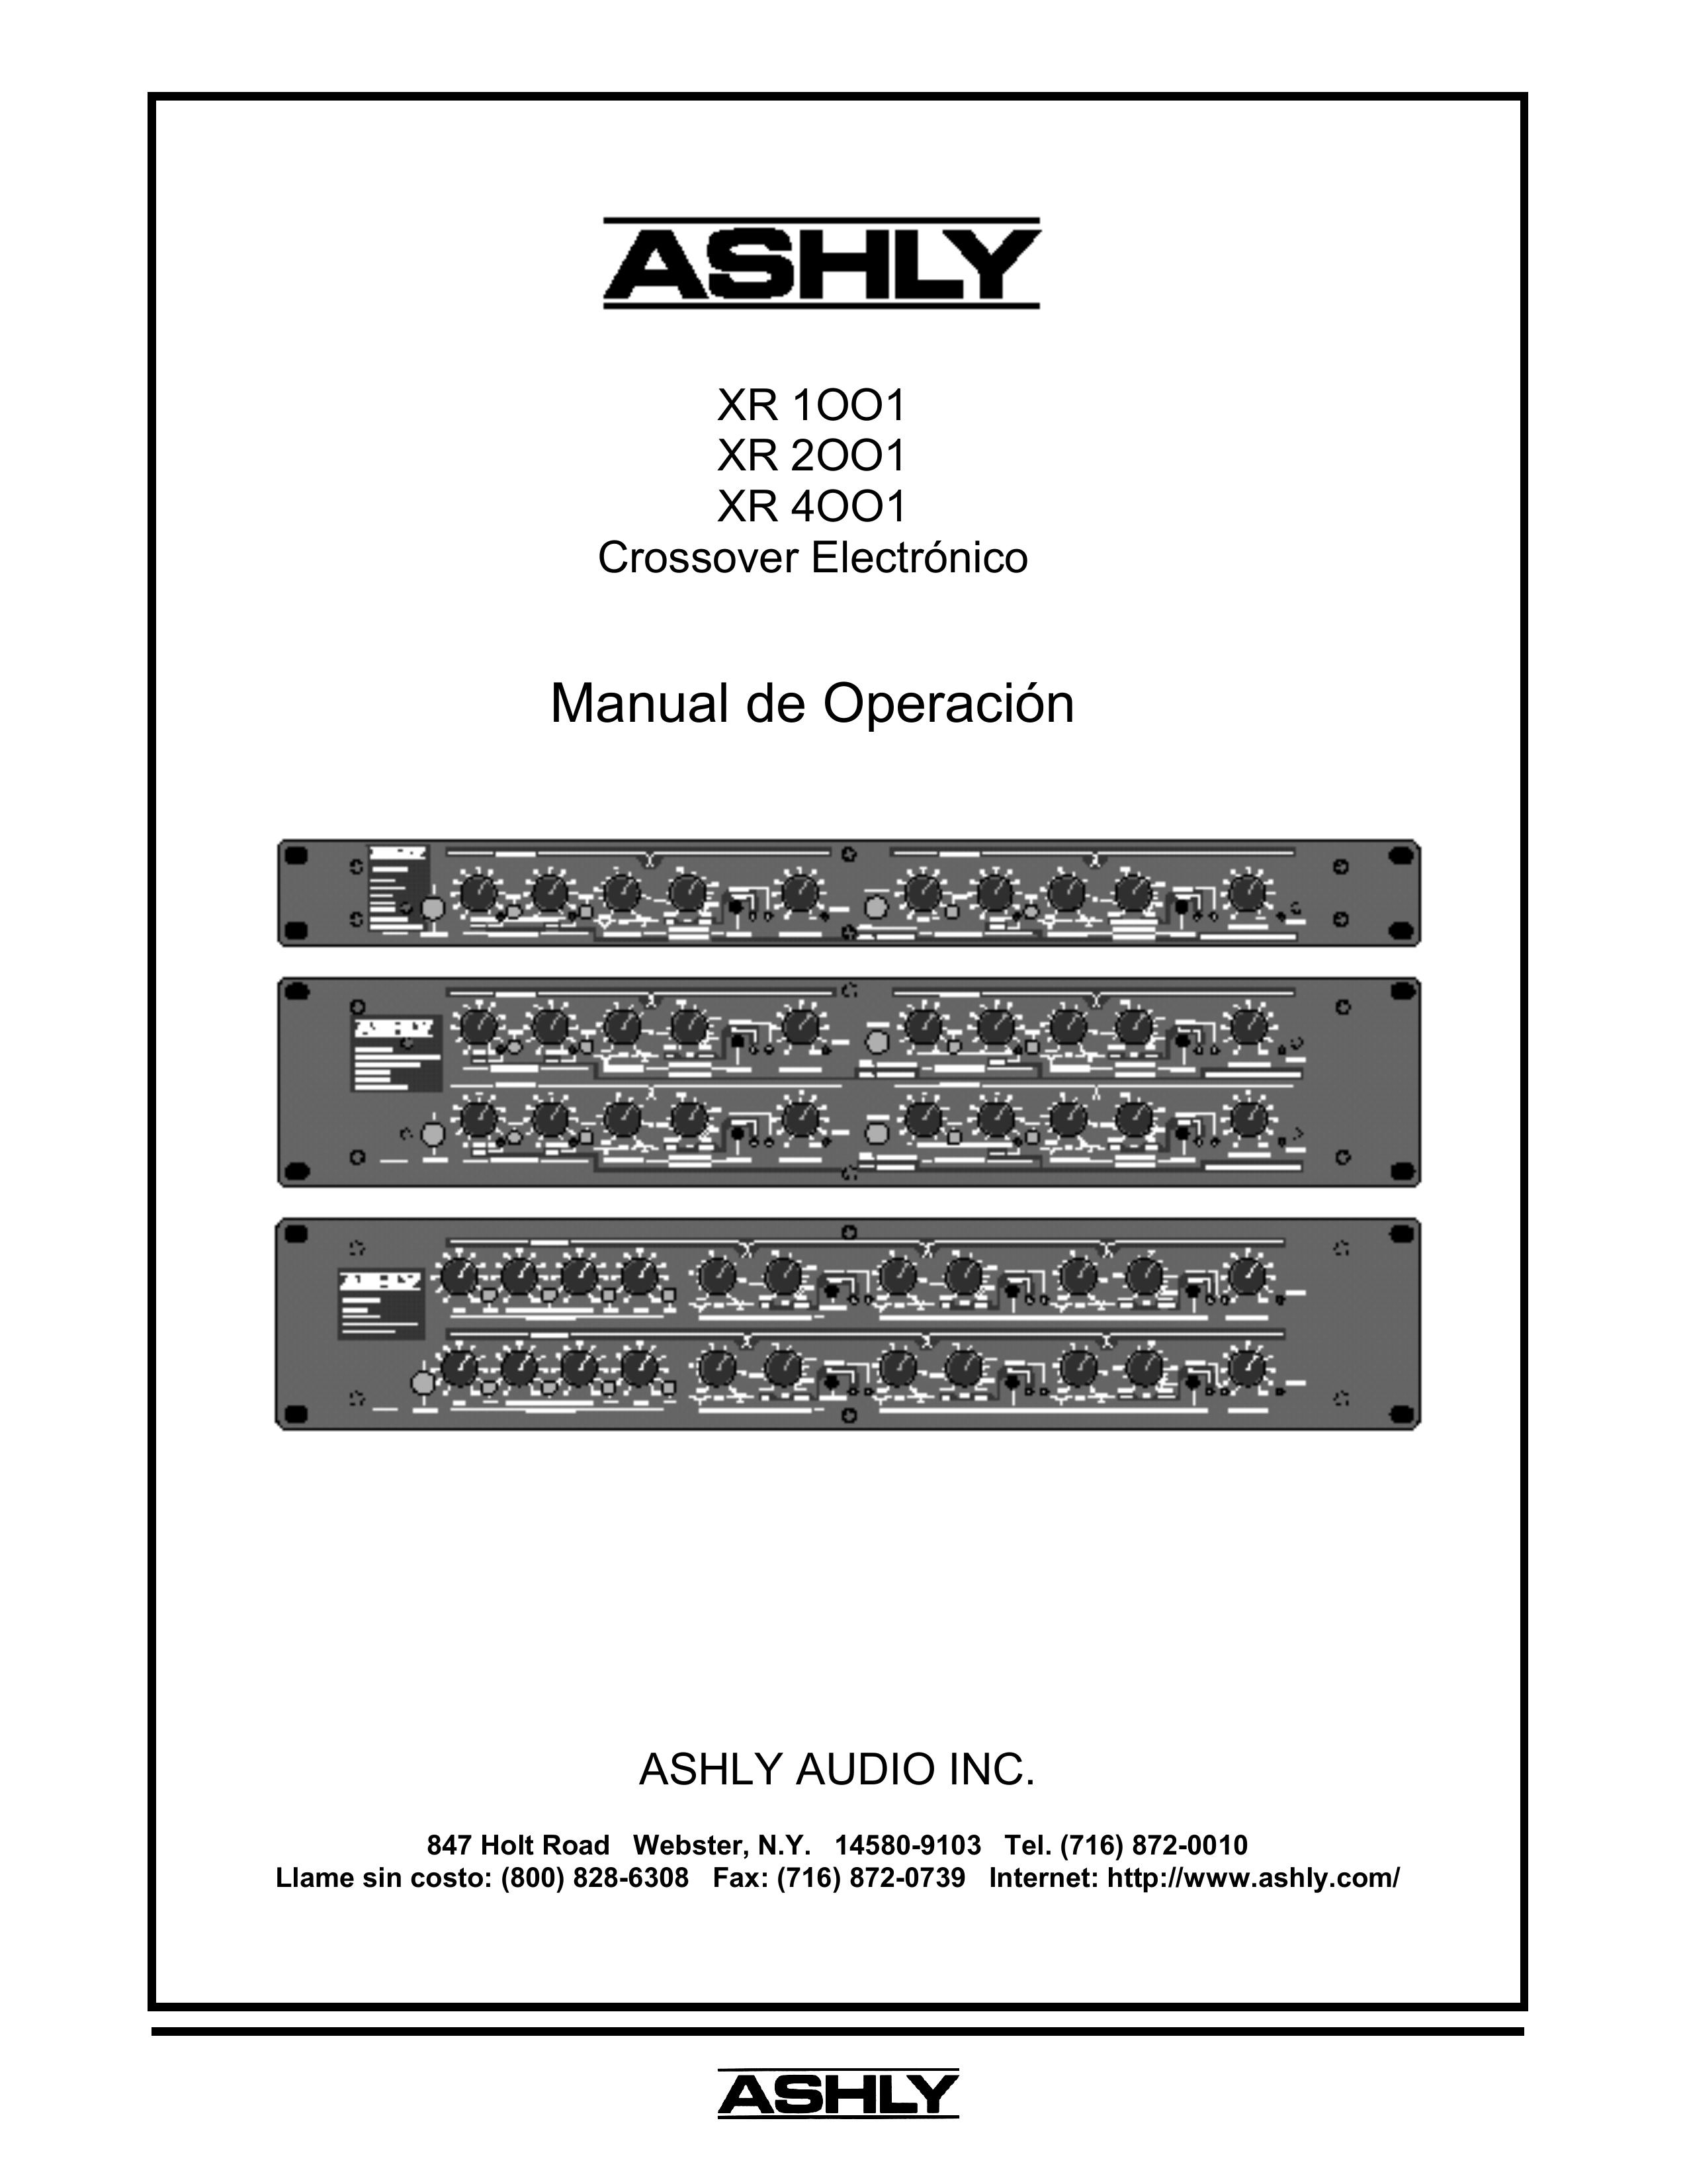 Ashly XR 2OO1 Music Mixer User Manual